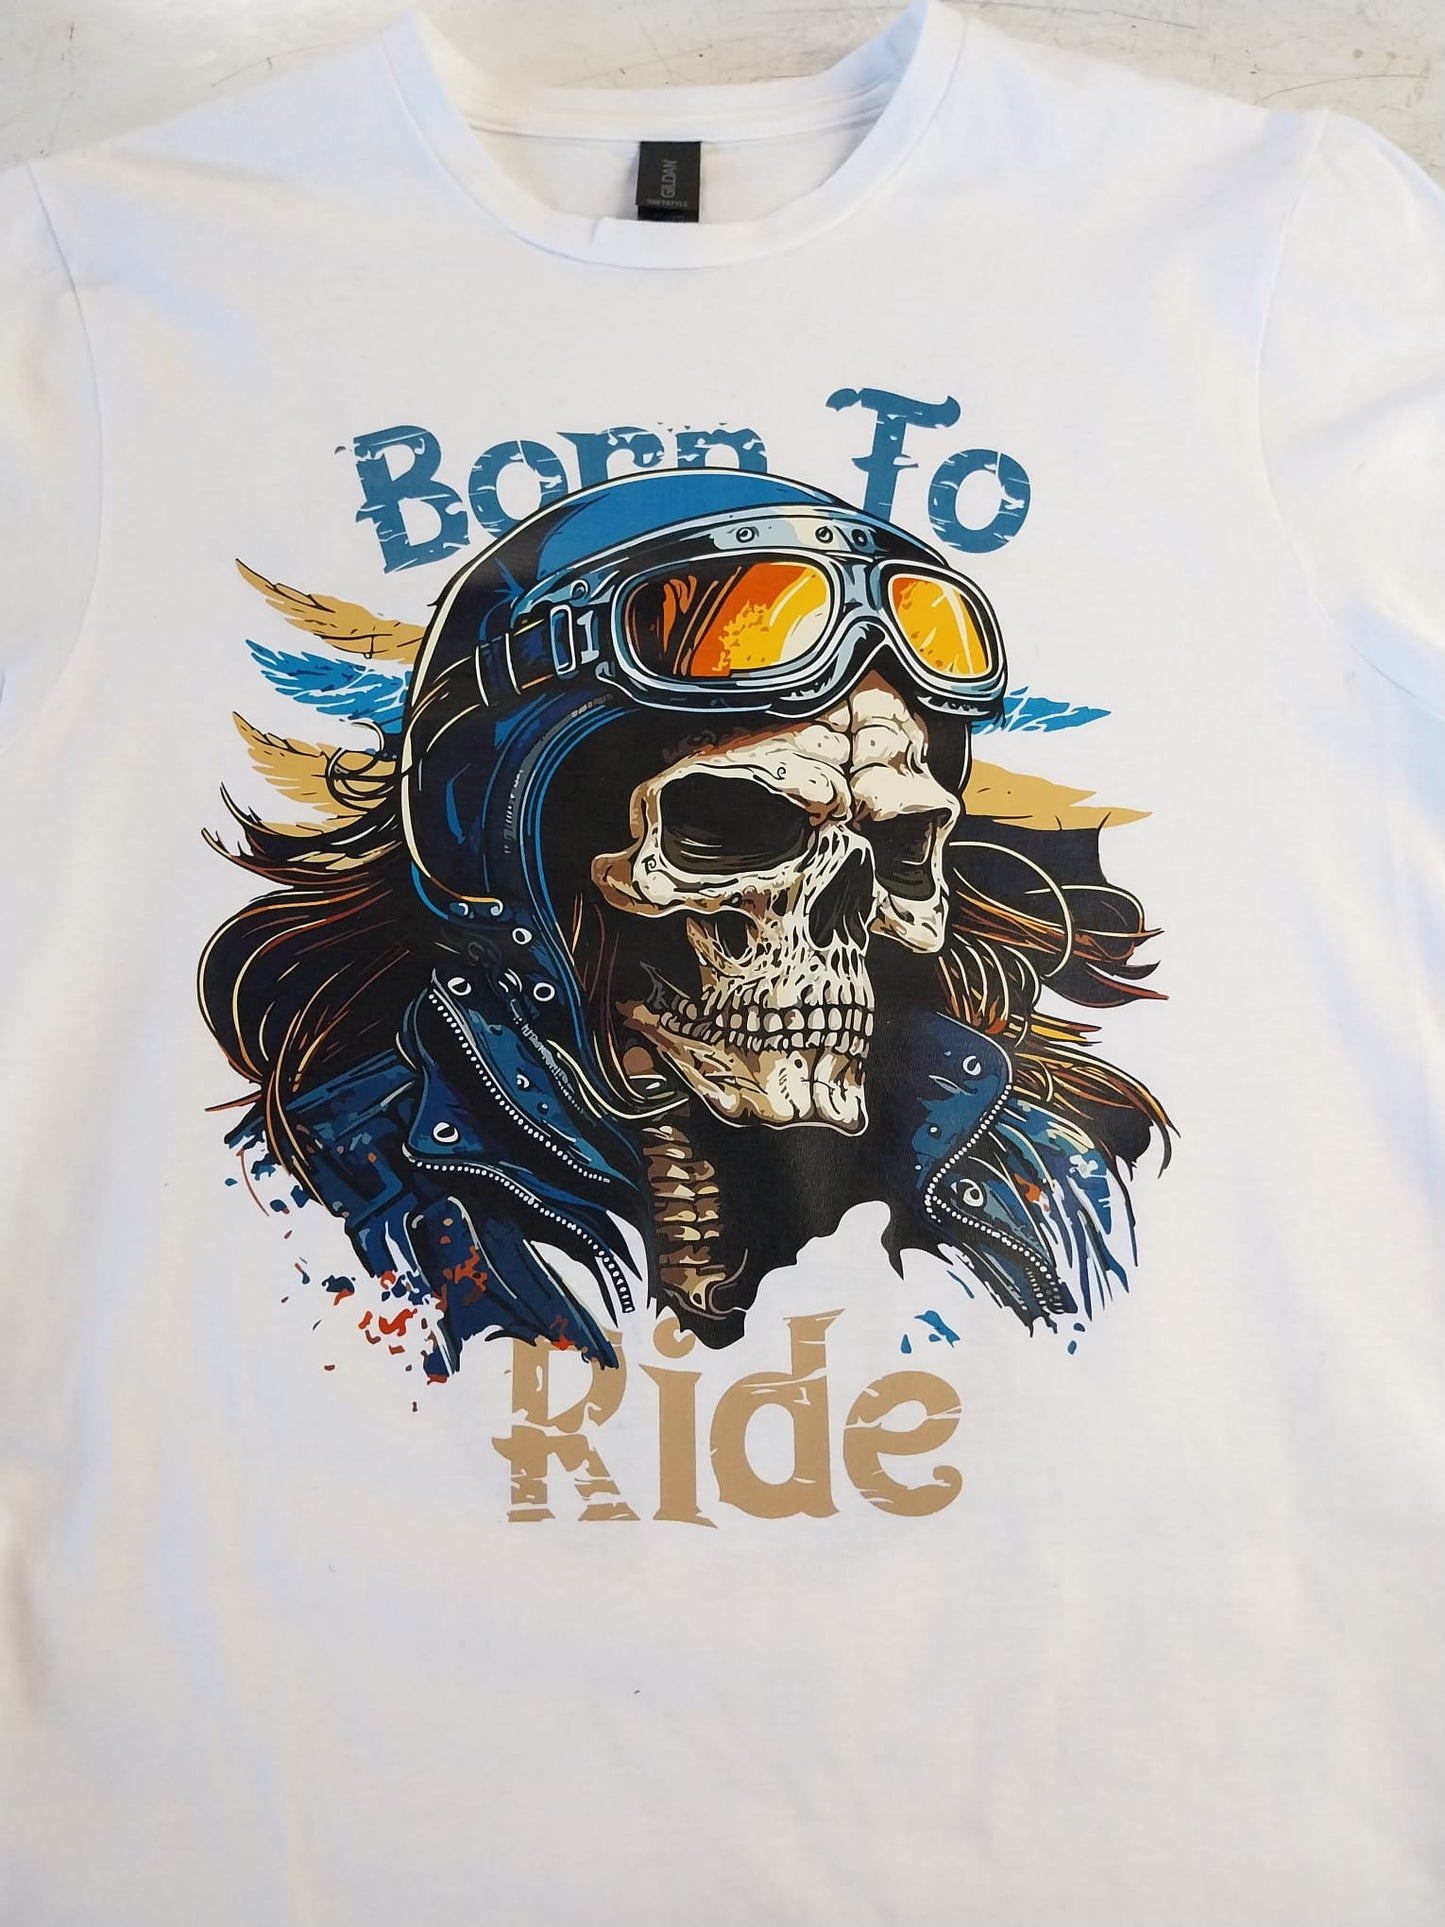 Born to Ride Motorbike Short Sleeve T-Shirt